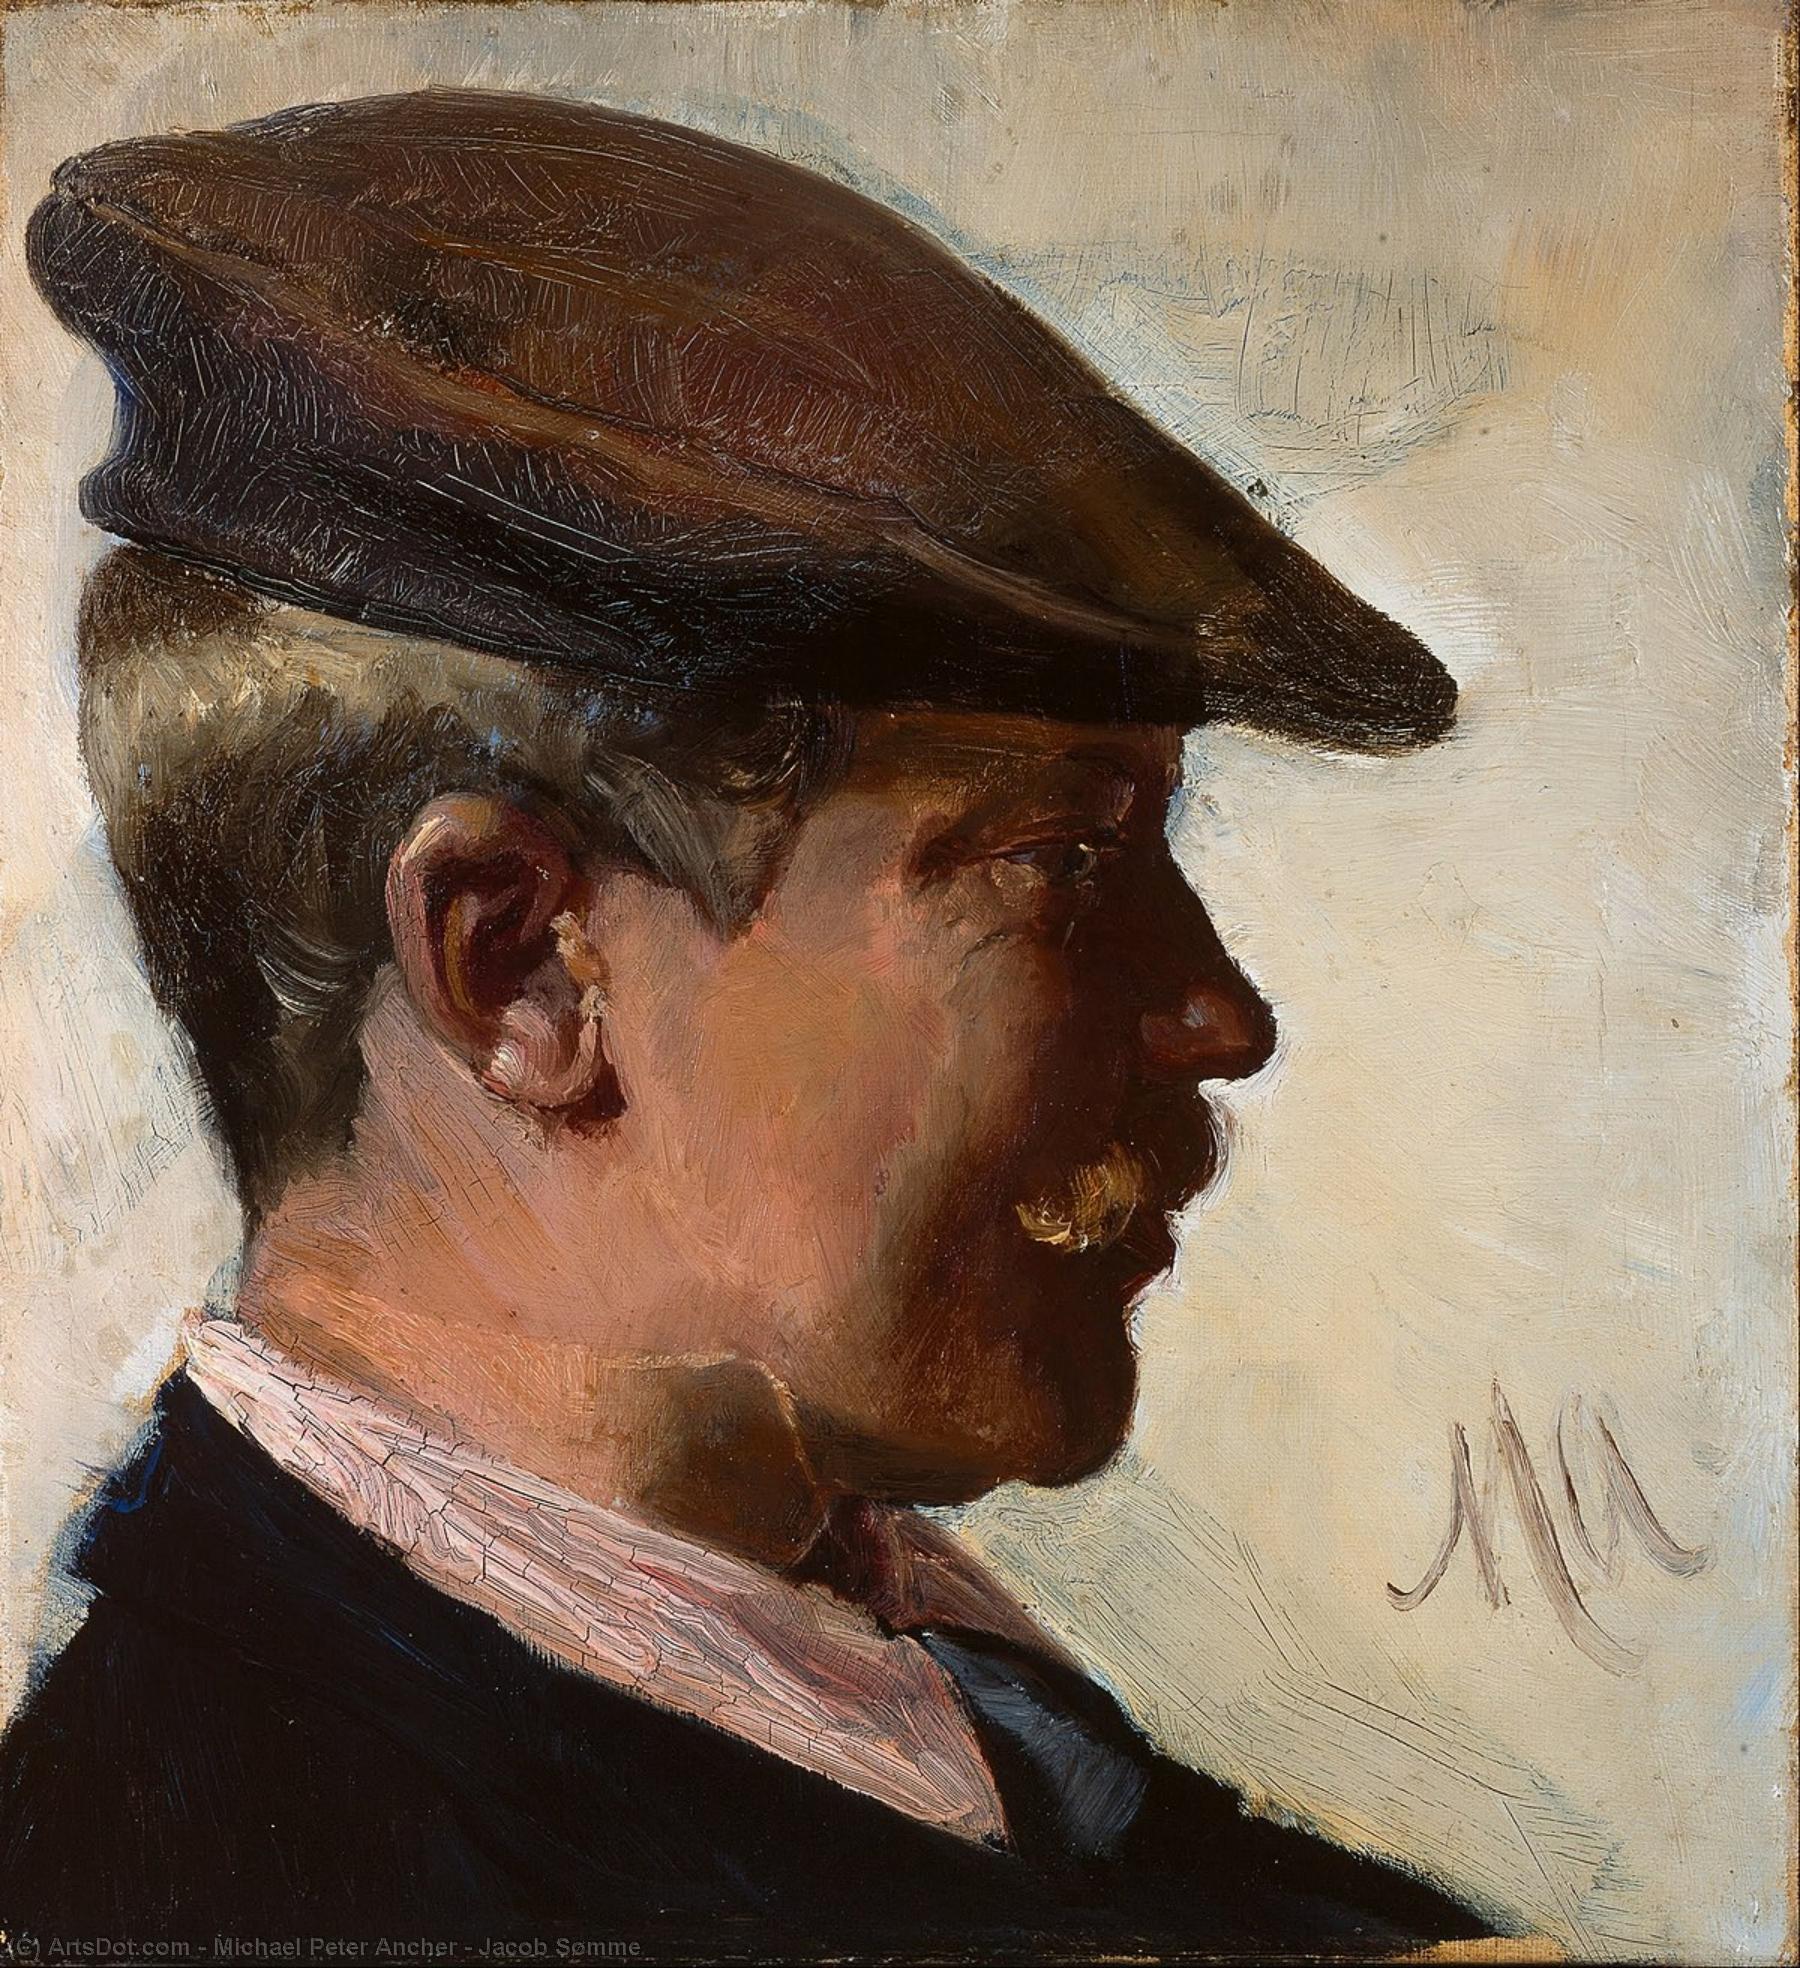 Buy Museum Art Reproductions Jacob Sømme, 1890 by Michael Peter Ancher (1849-1927) | ArtsDot.com